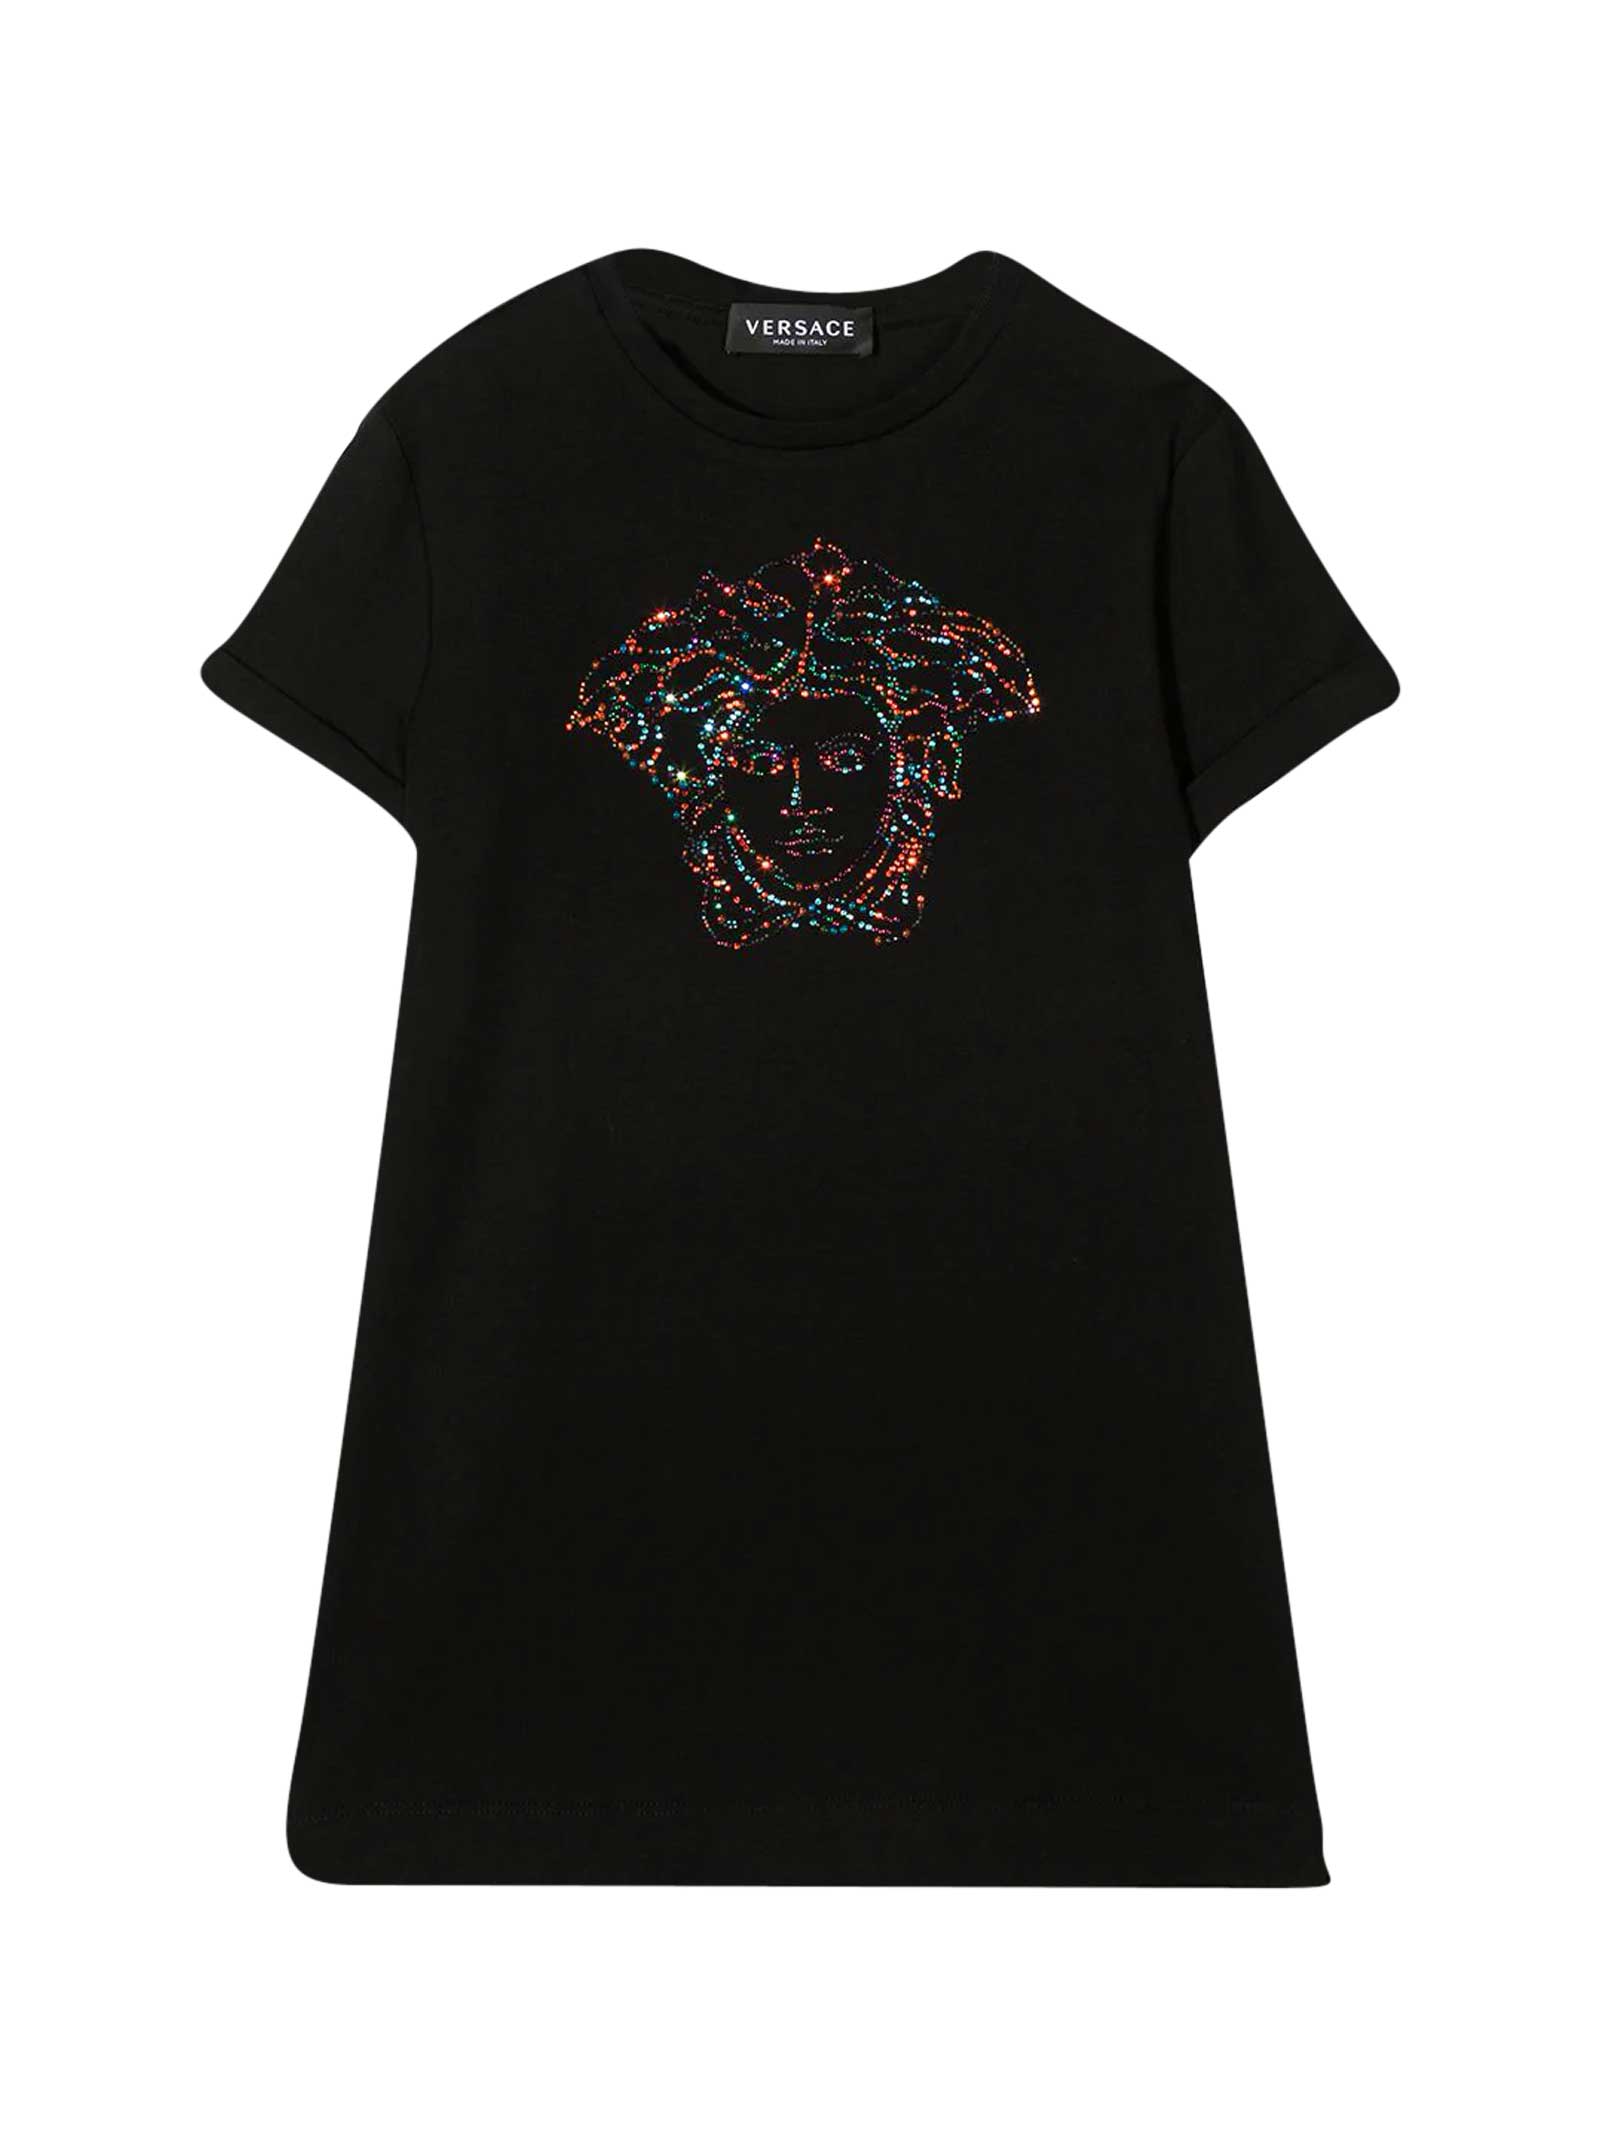 Young Versace Black Dress T-shirt